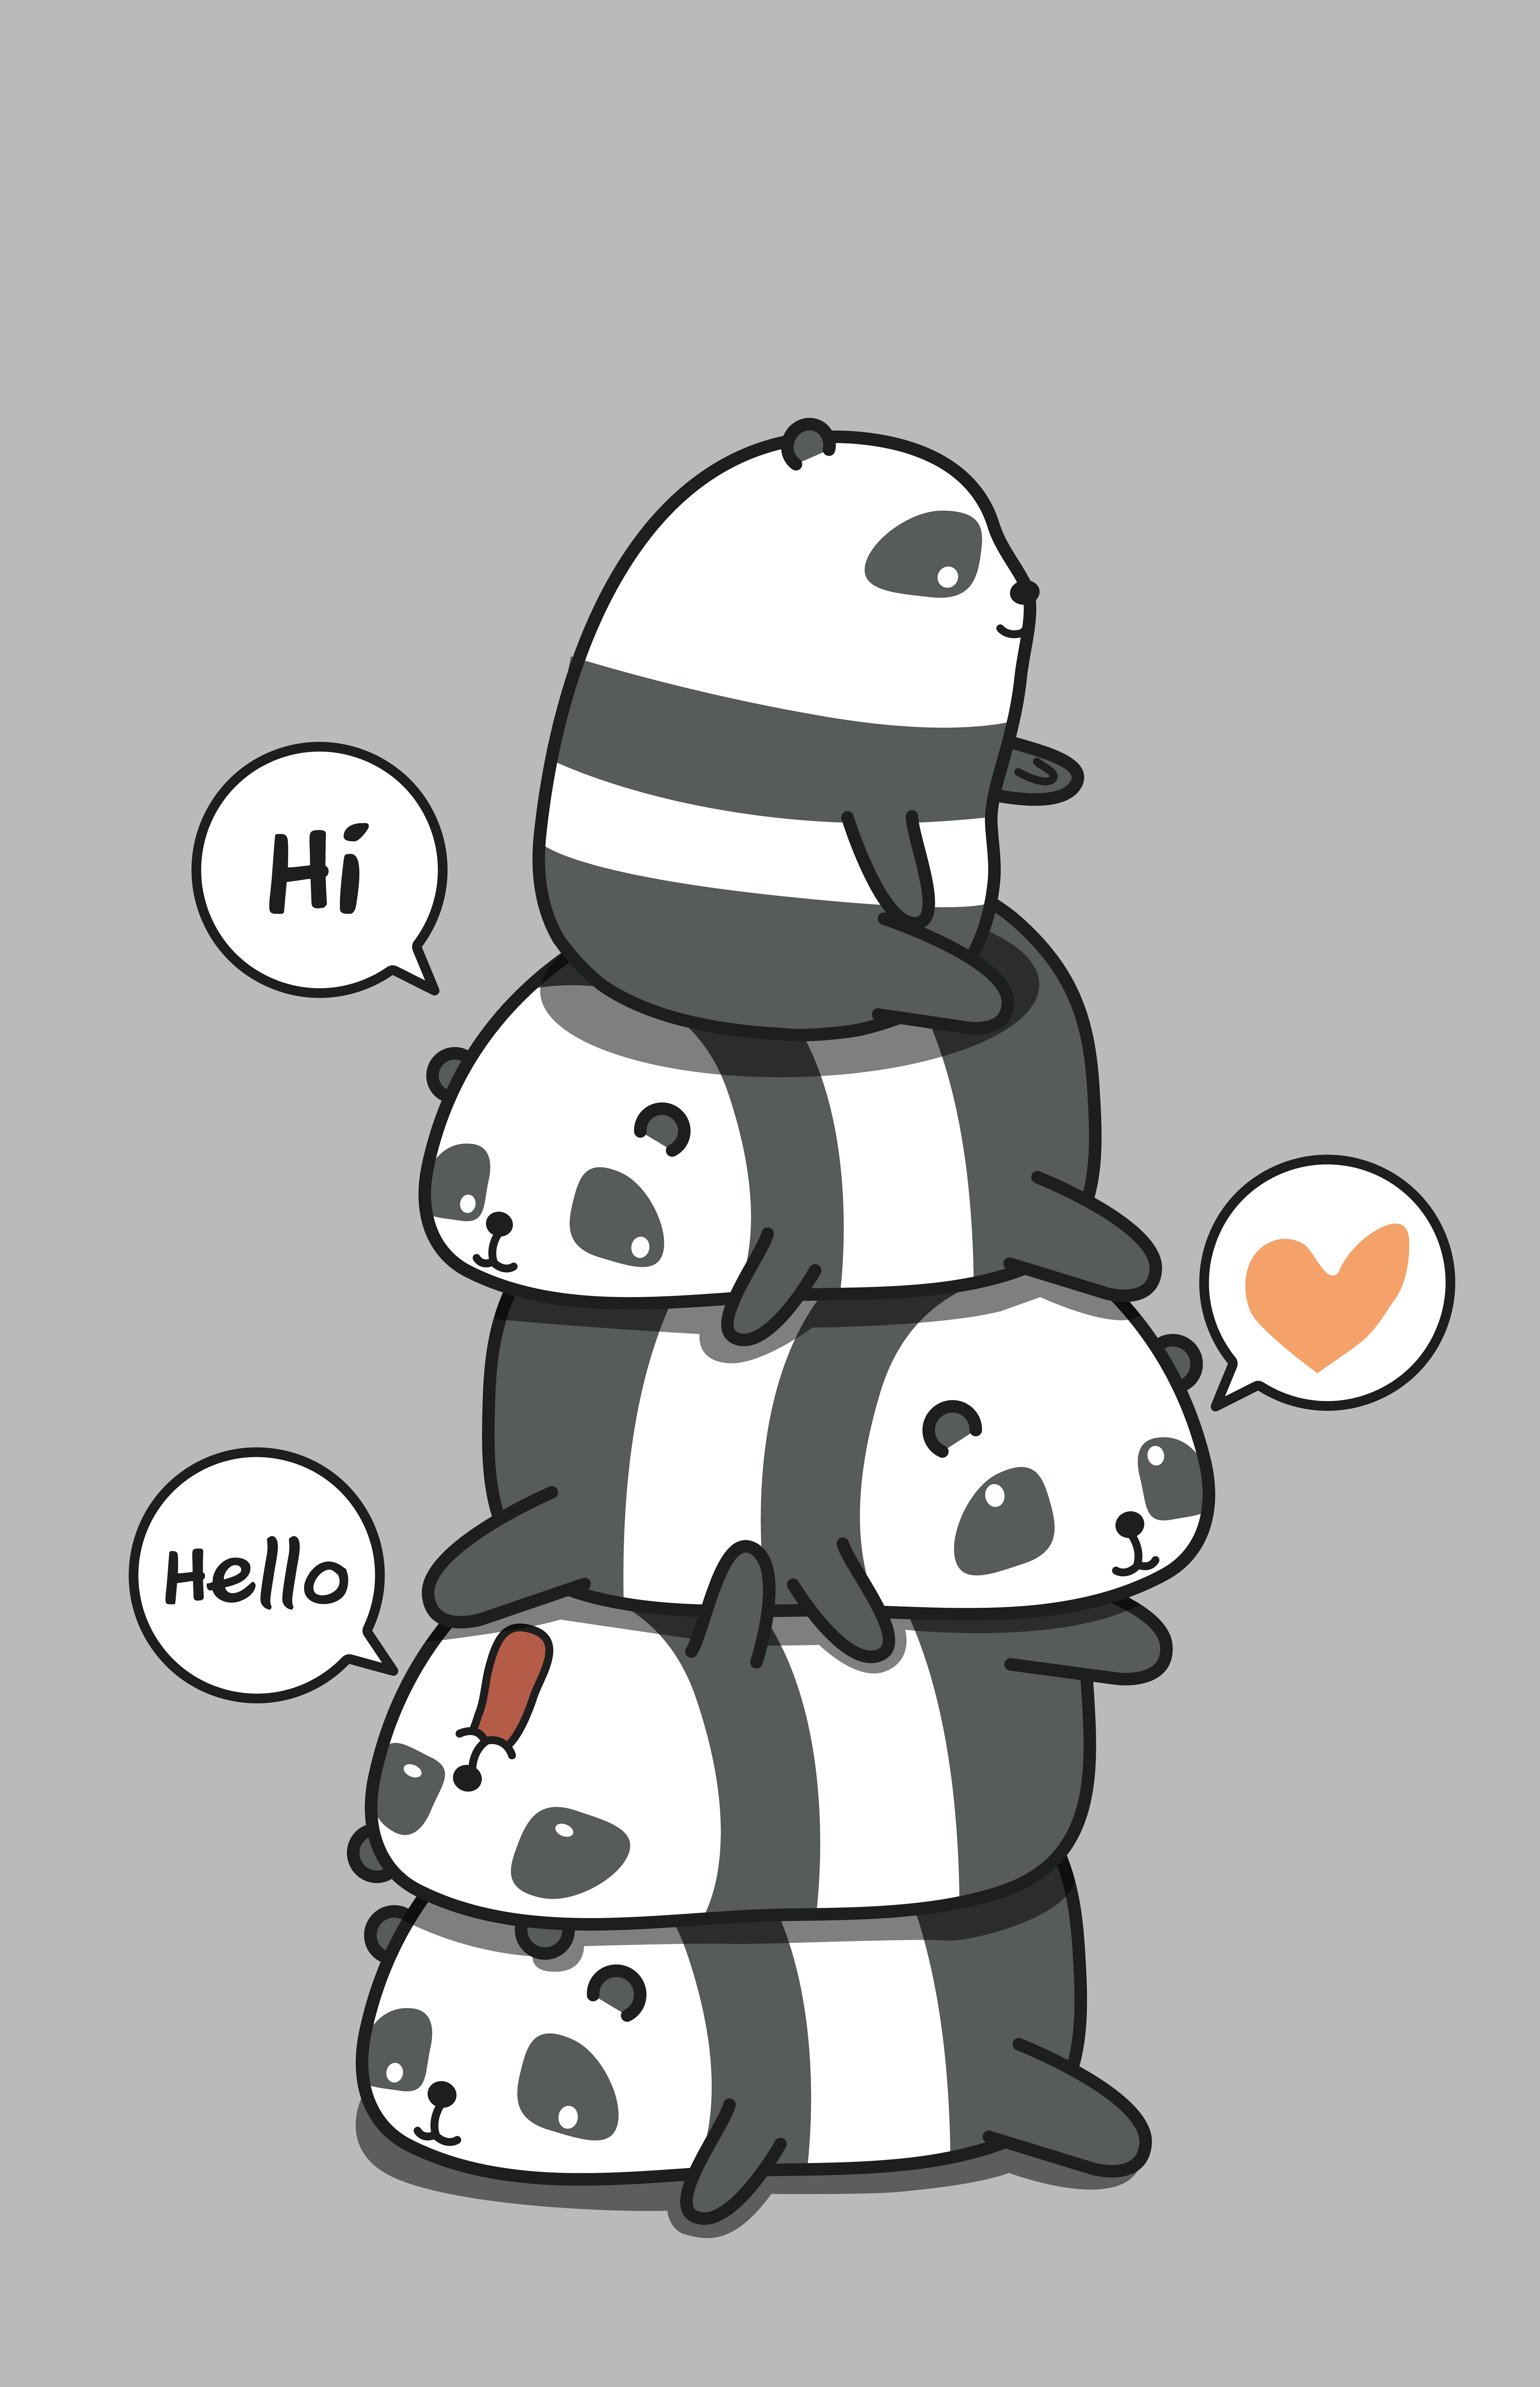 Download 5 cute panda characters. - Download Free Vectors, Clipart ...